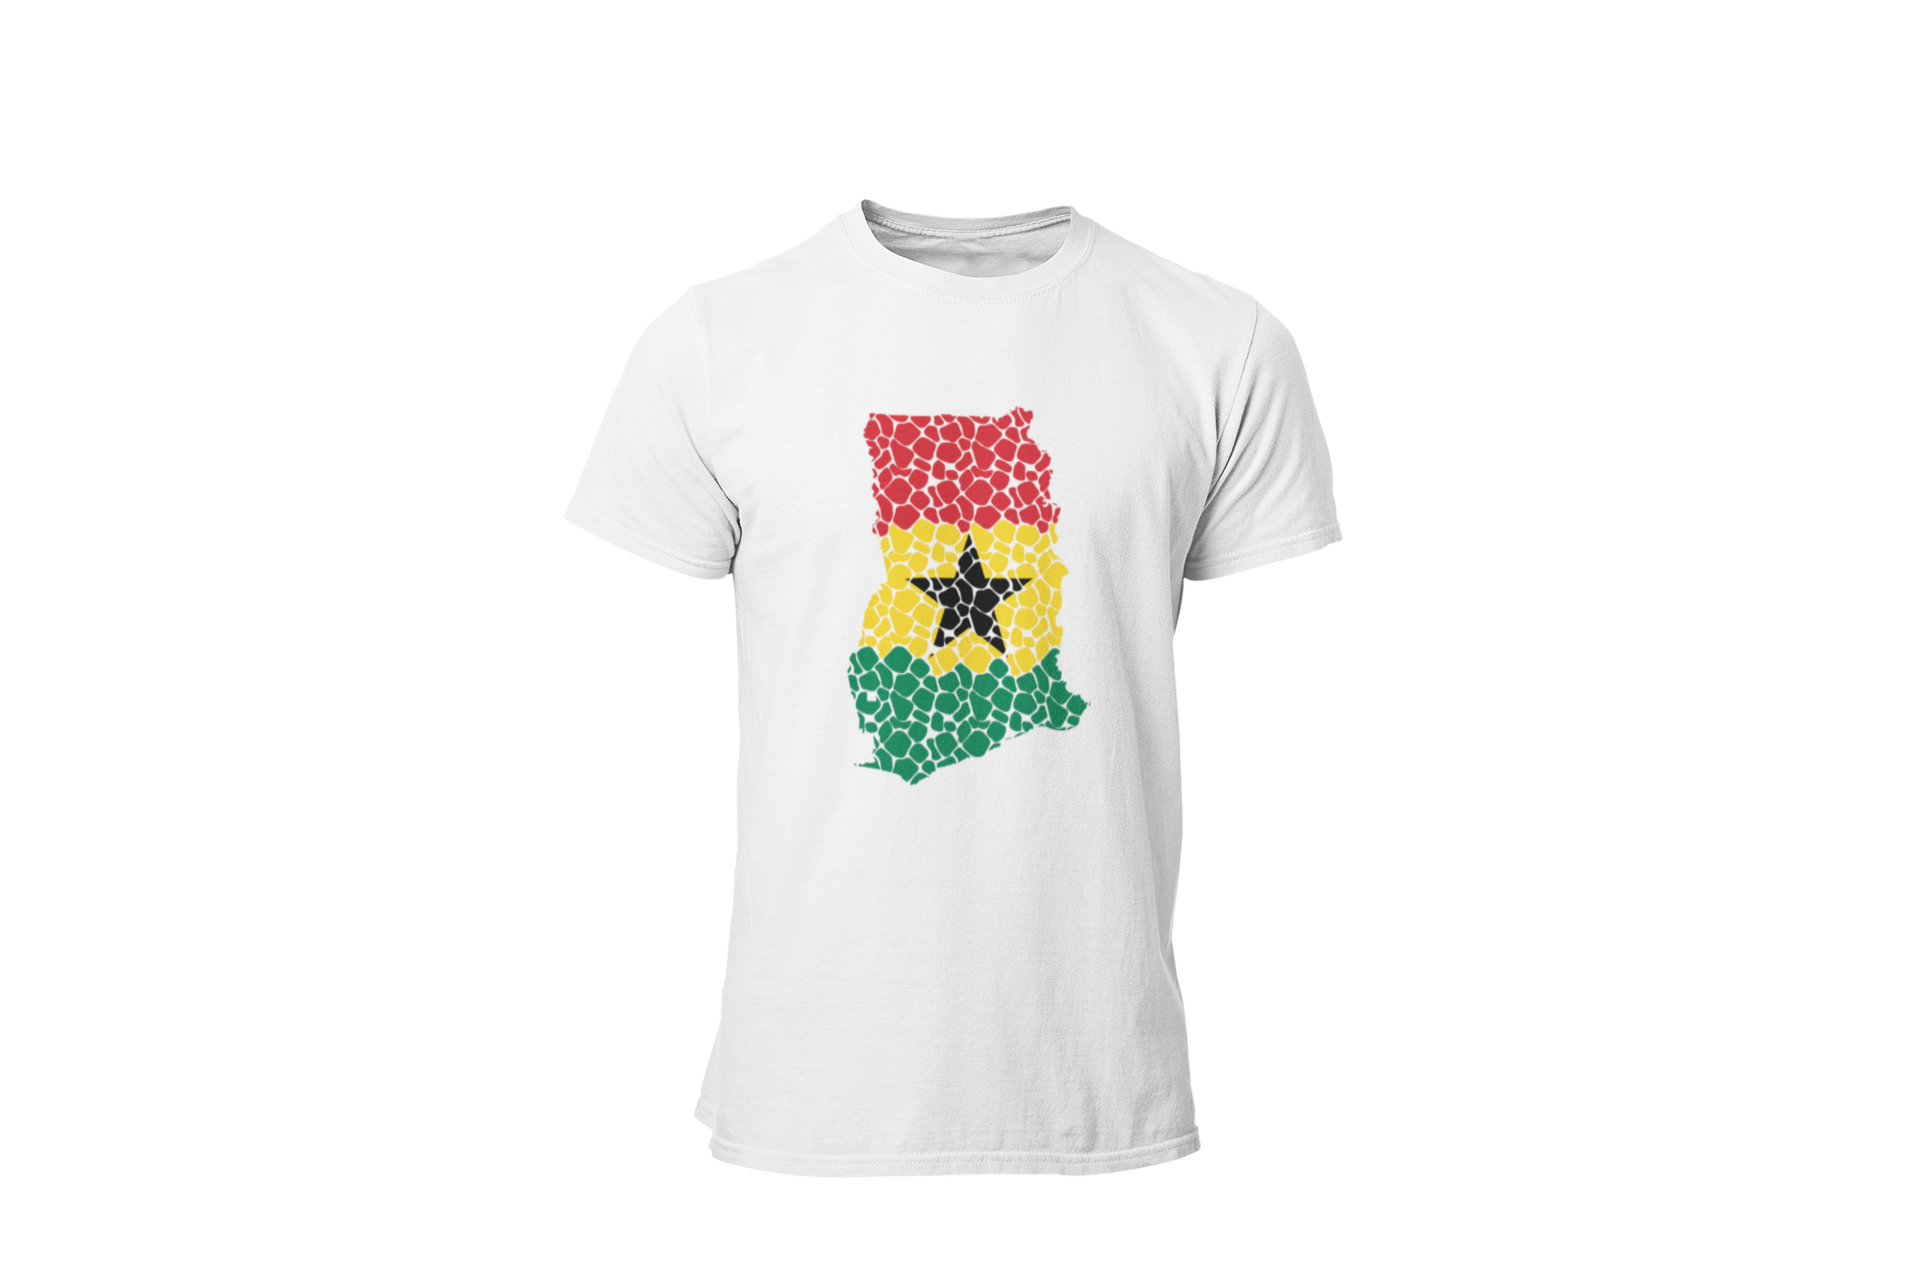 From the Soils of Ghana T-shirt